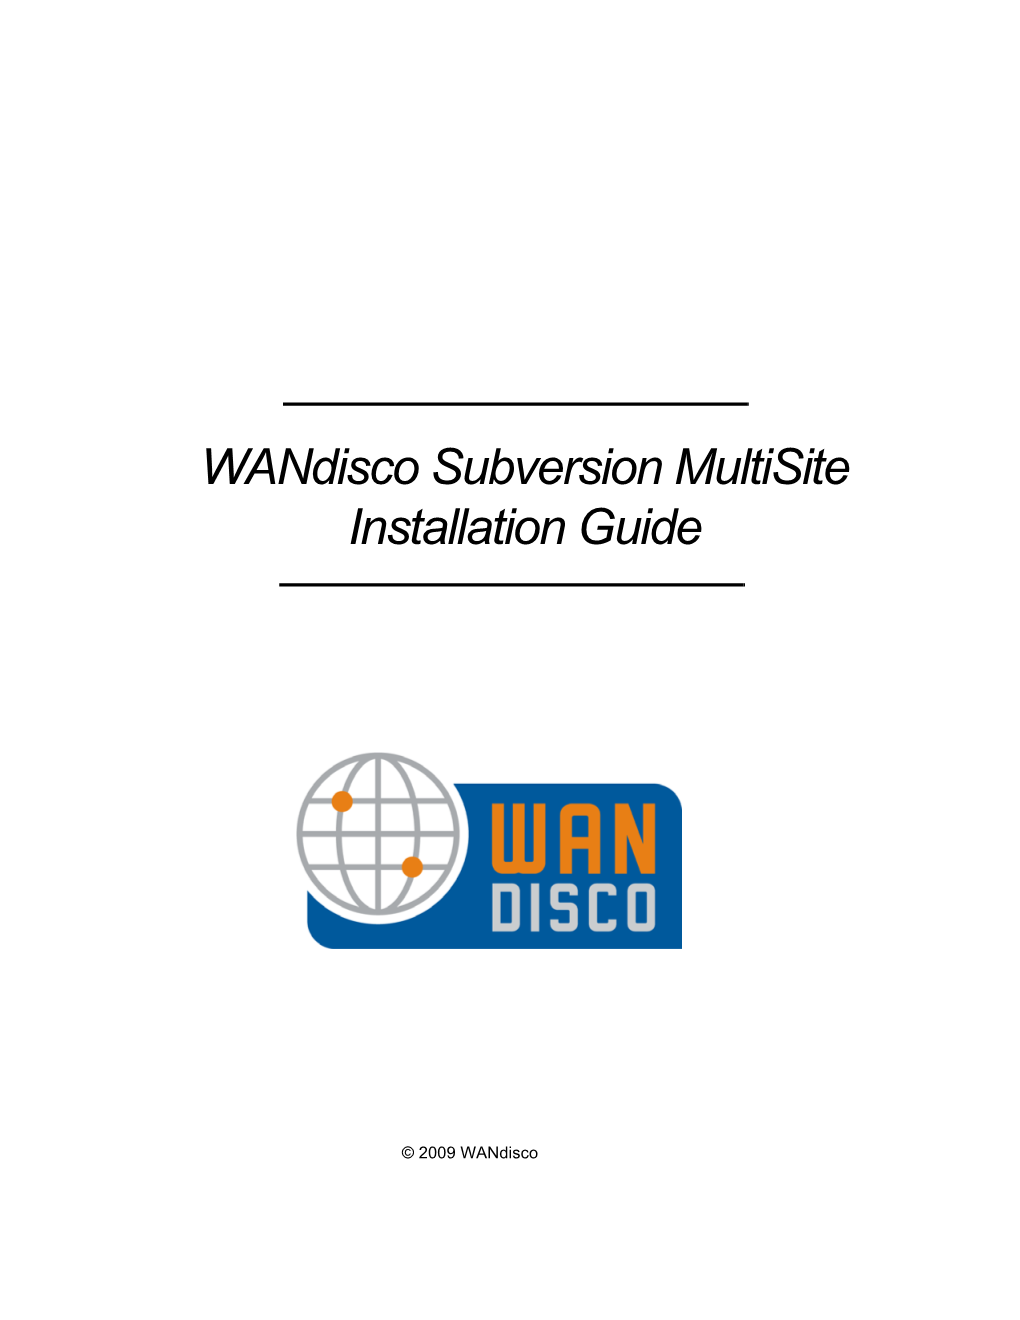 Wandisco Subversion Multisite Installation Guide